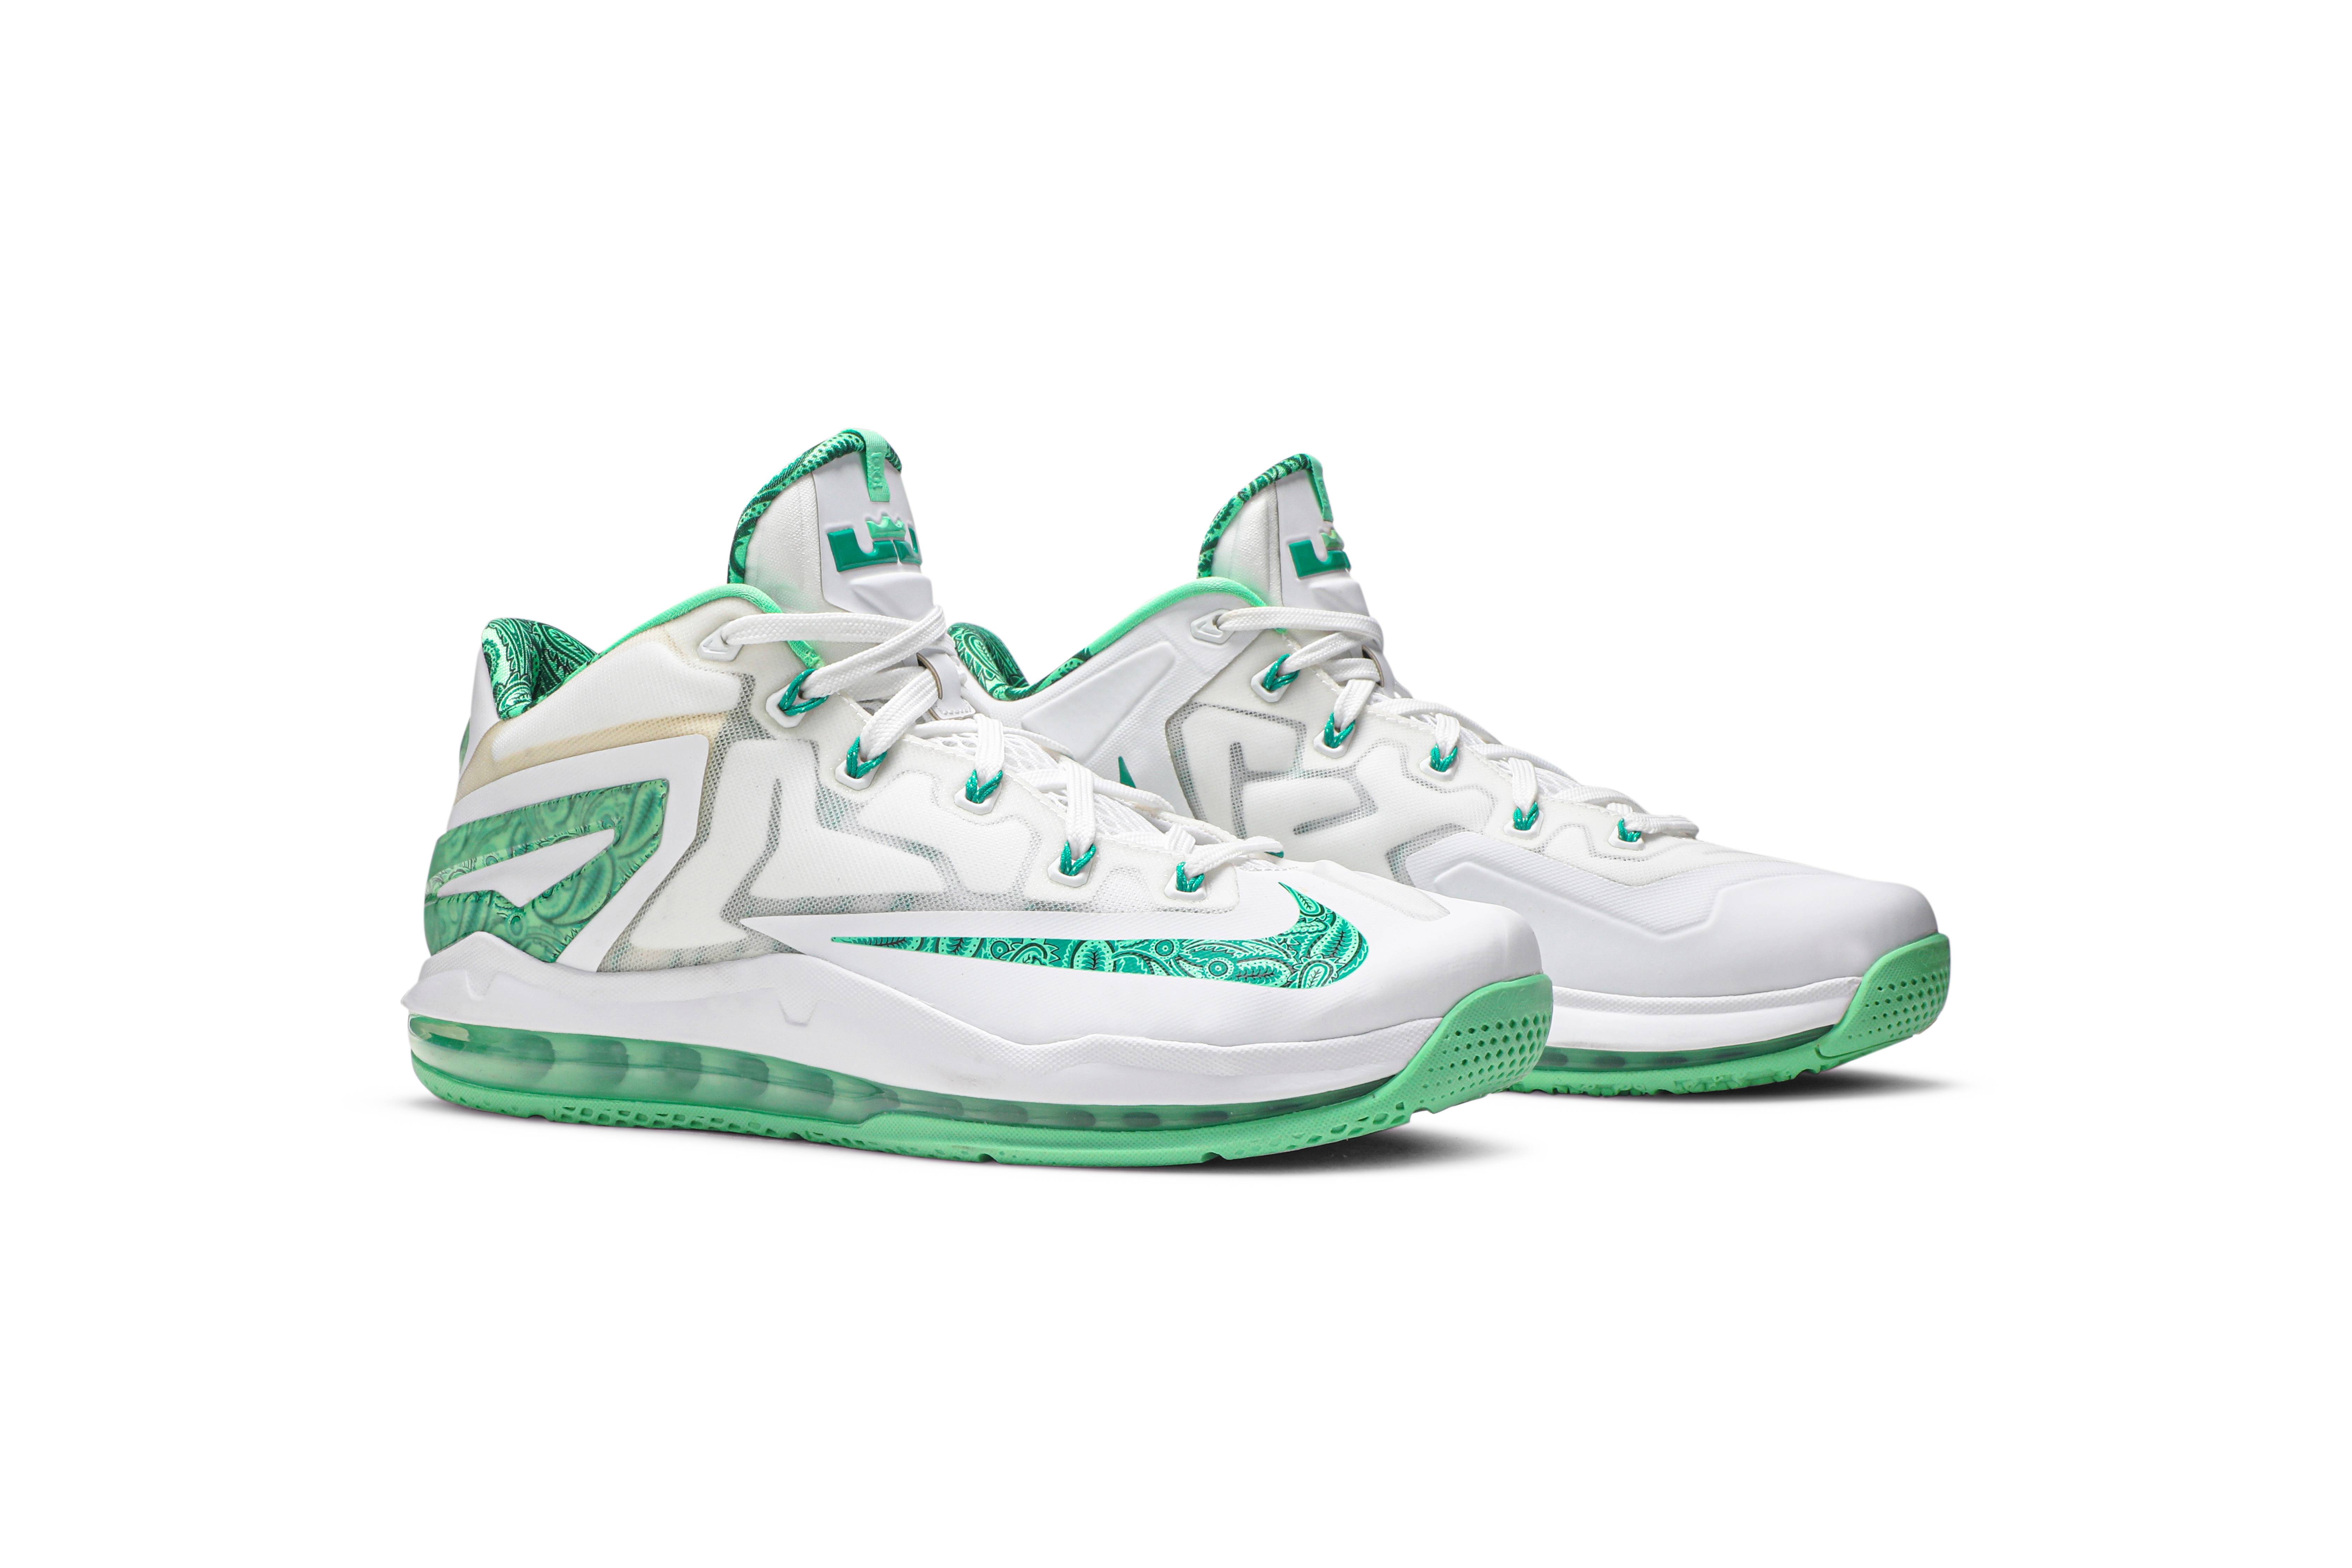 Nike LeBron 11 Low Easter - 642849-100 